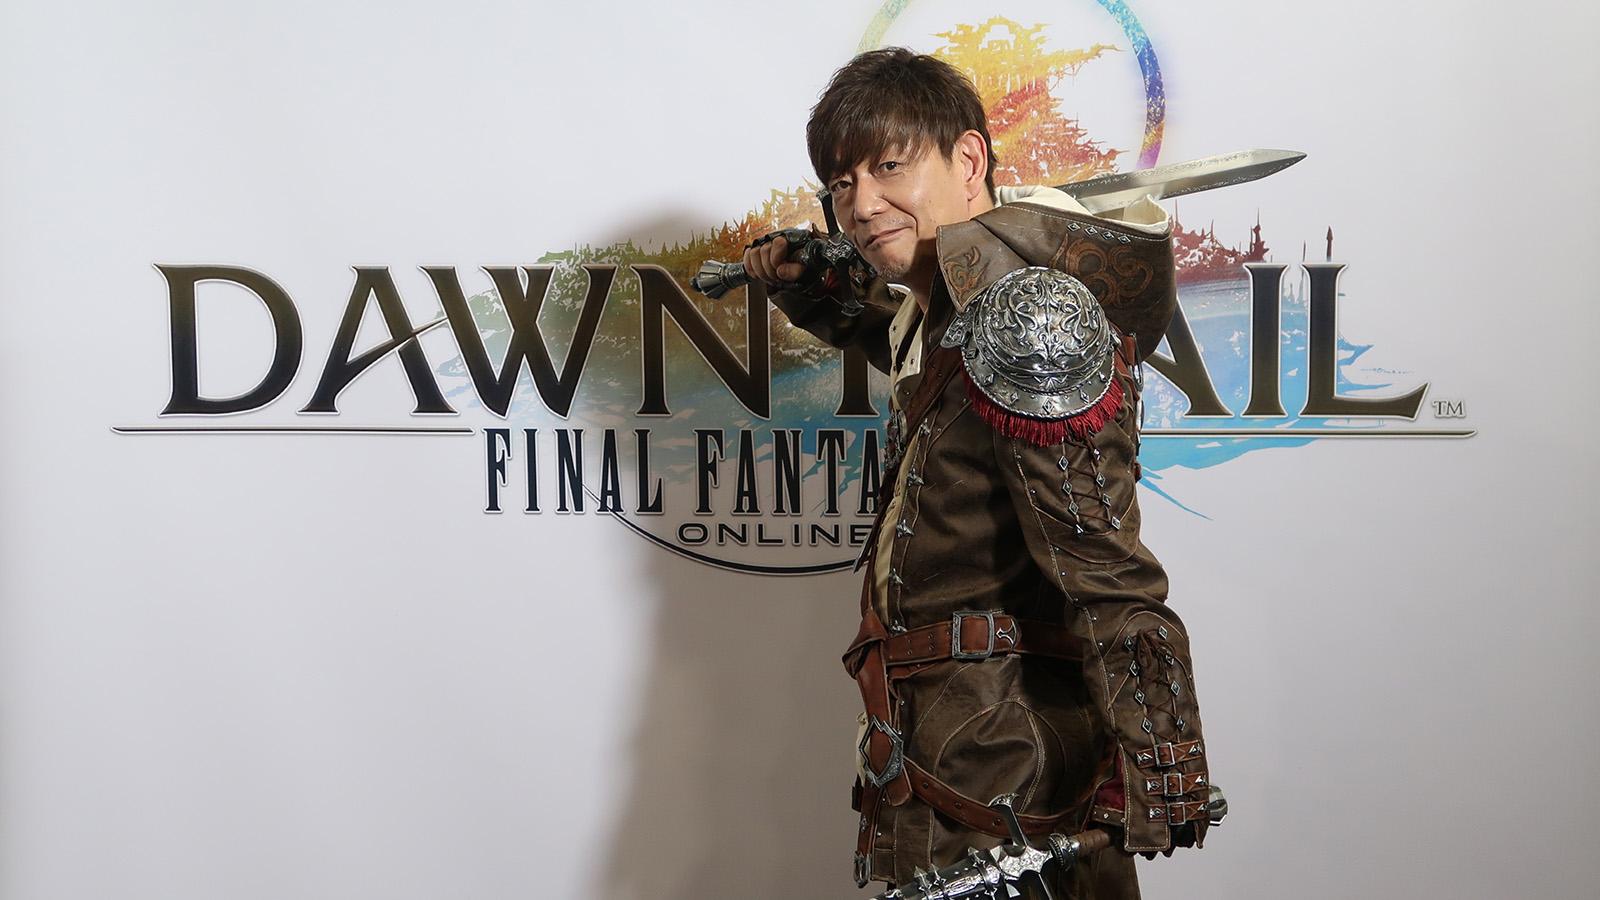 Final Fantasy XIV’s executive producer, Naoki Yoshida, appears at Fan Fest